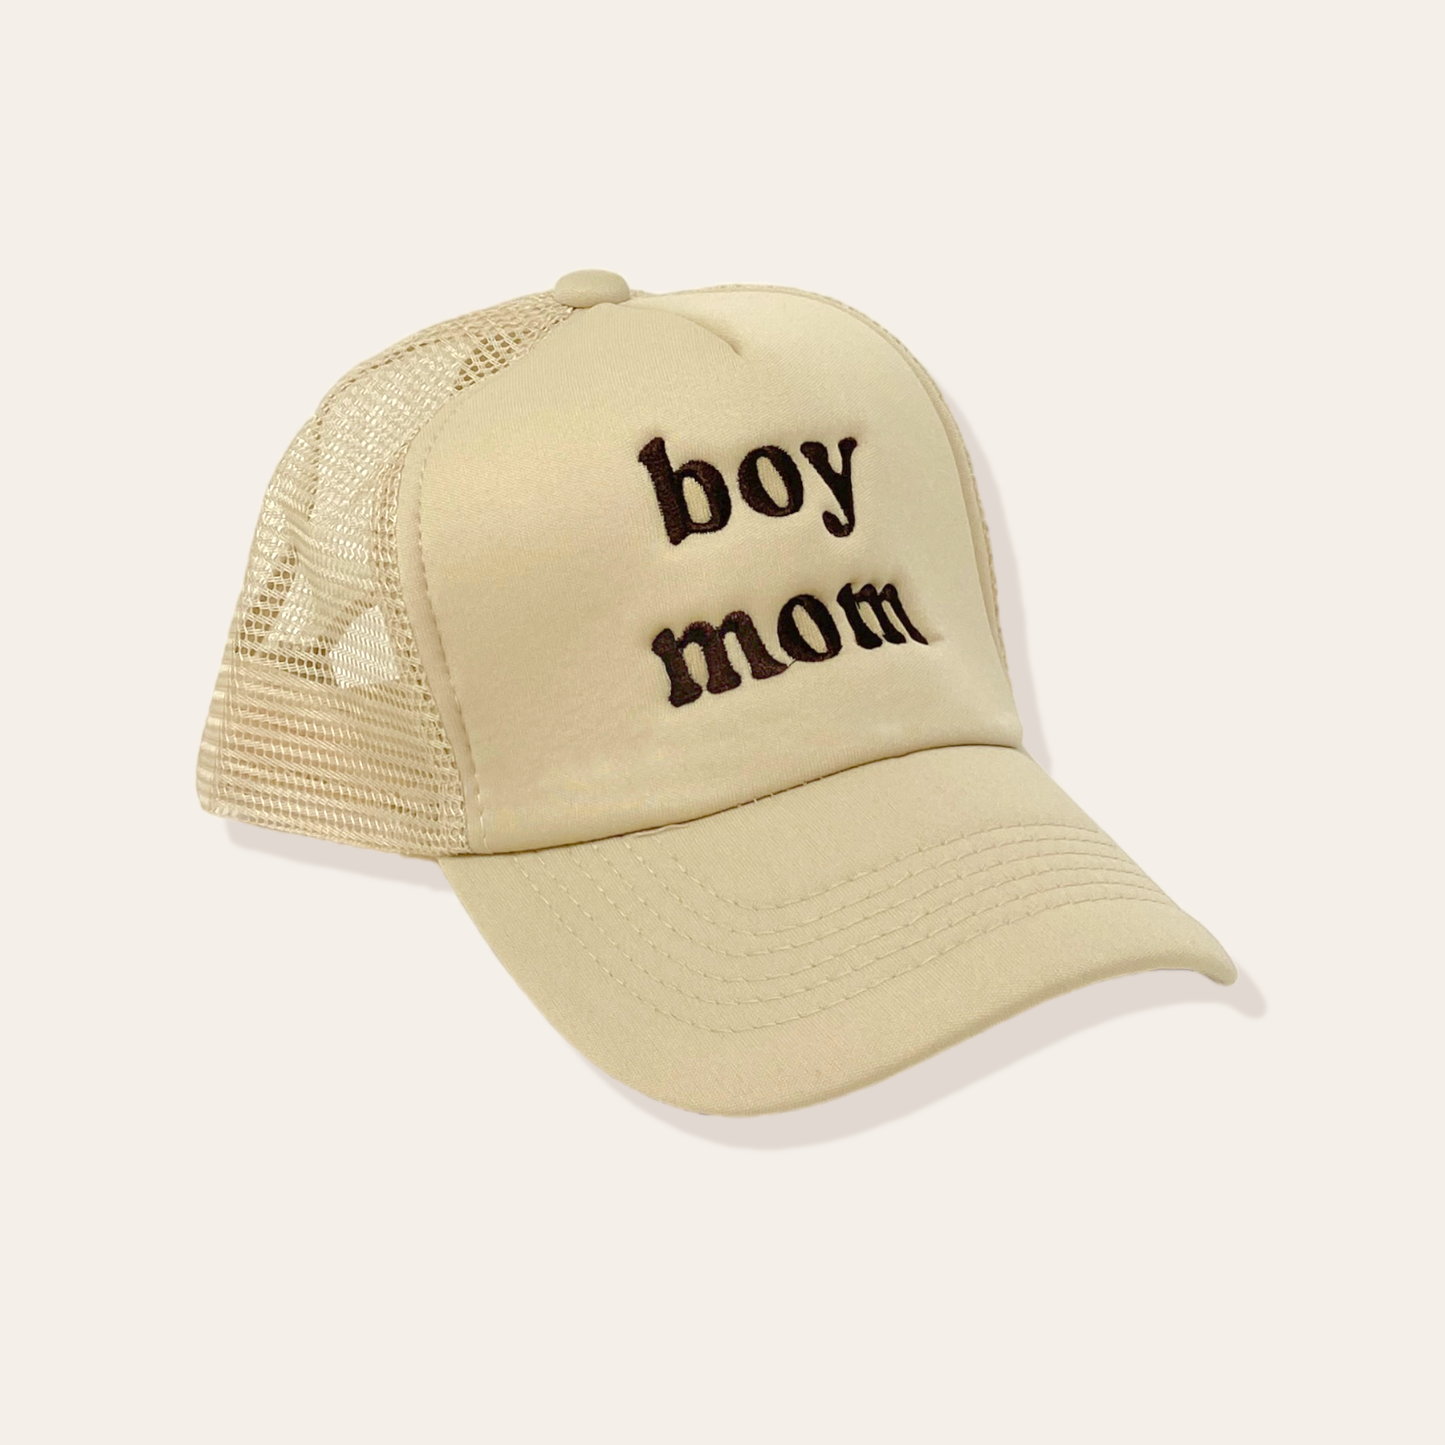 PREORDER - Women's Trucker Hat - Boy Mom